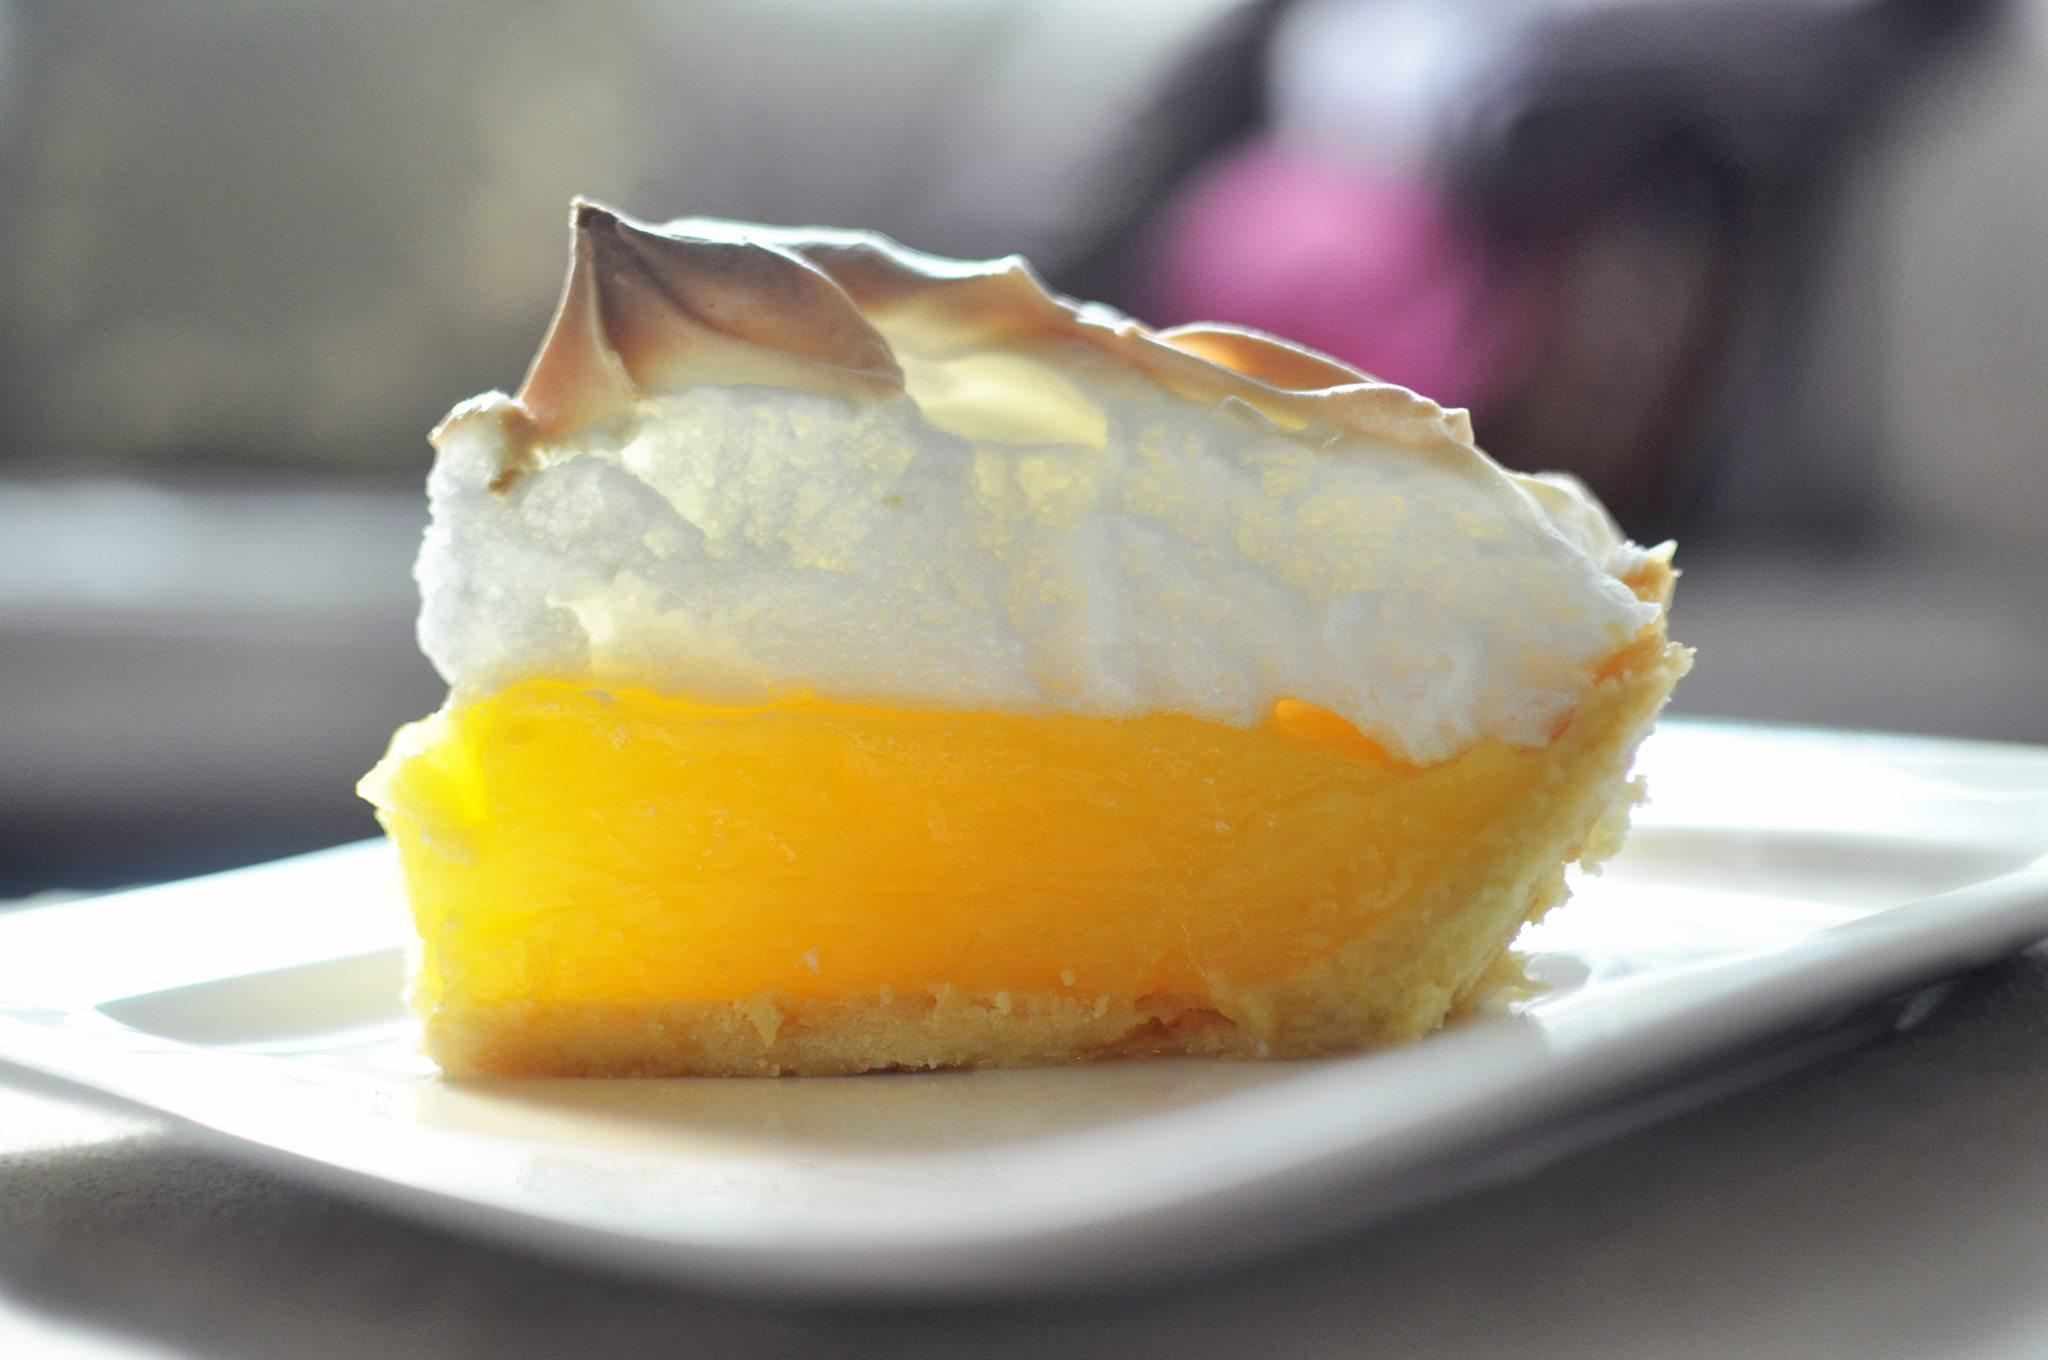 Can you make a lemon meringue pie for me ? 